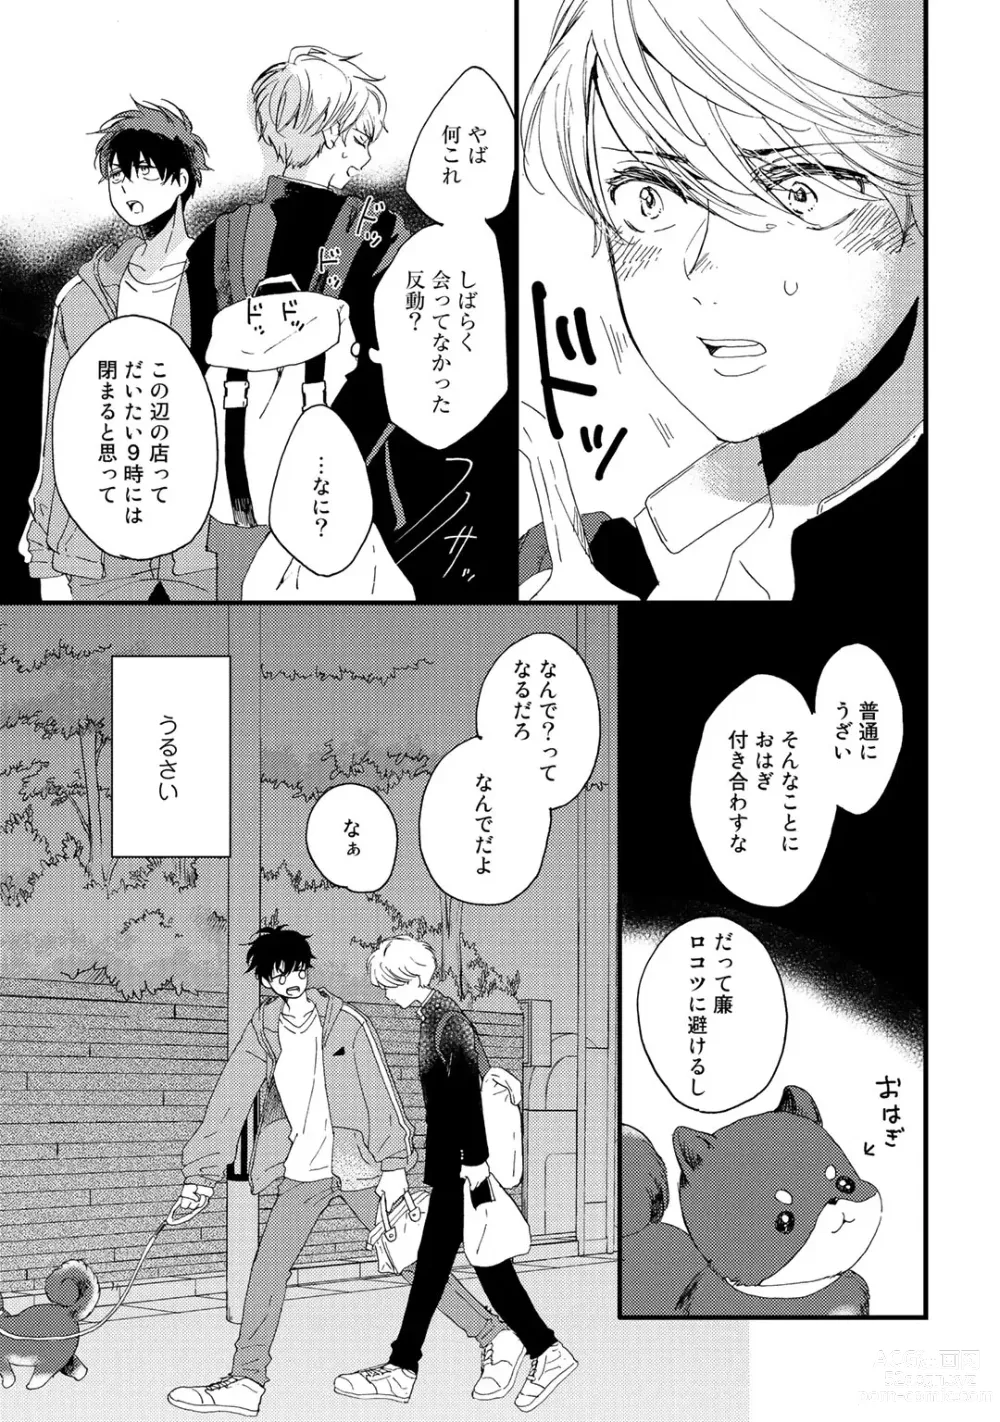 Page 25 of manga Hatsukoi Escape